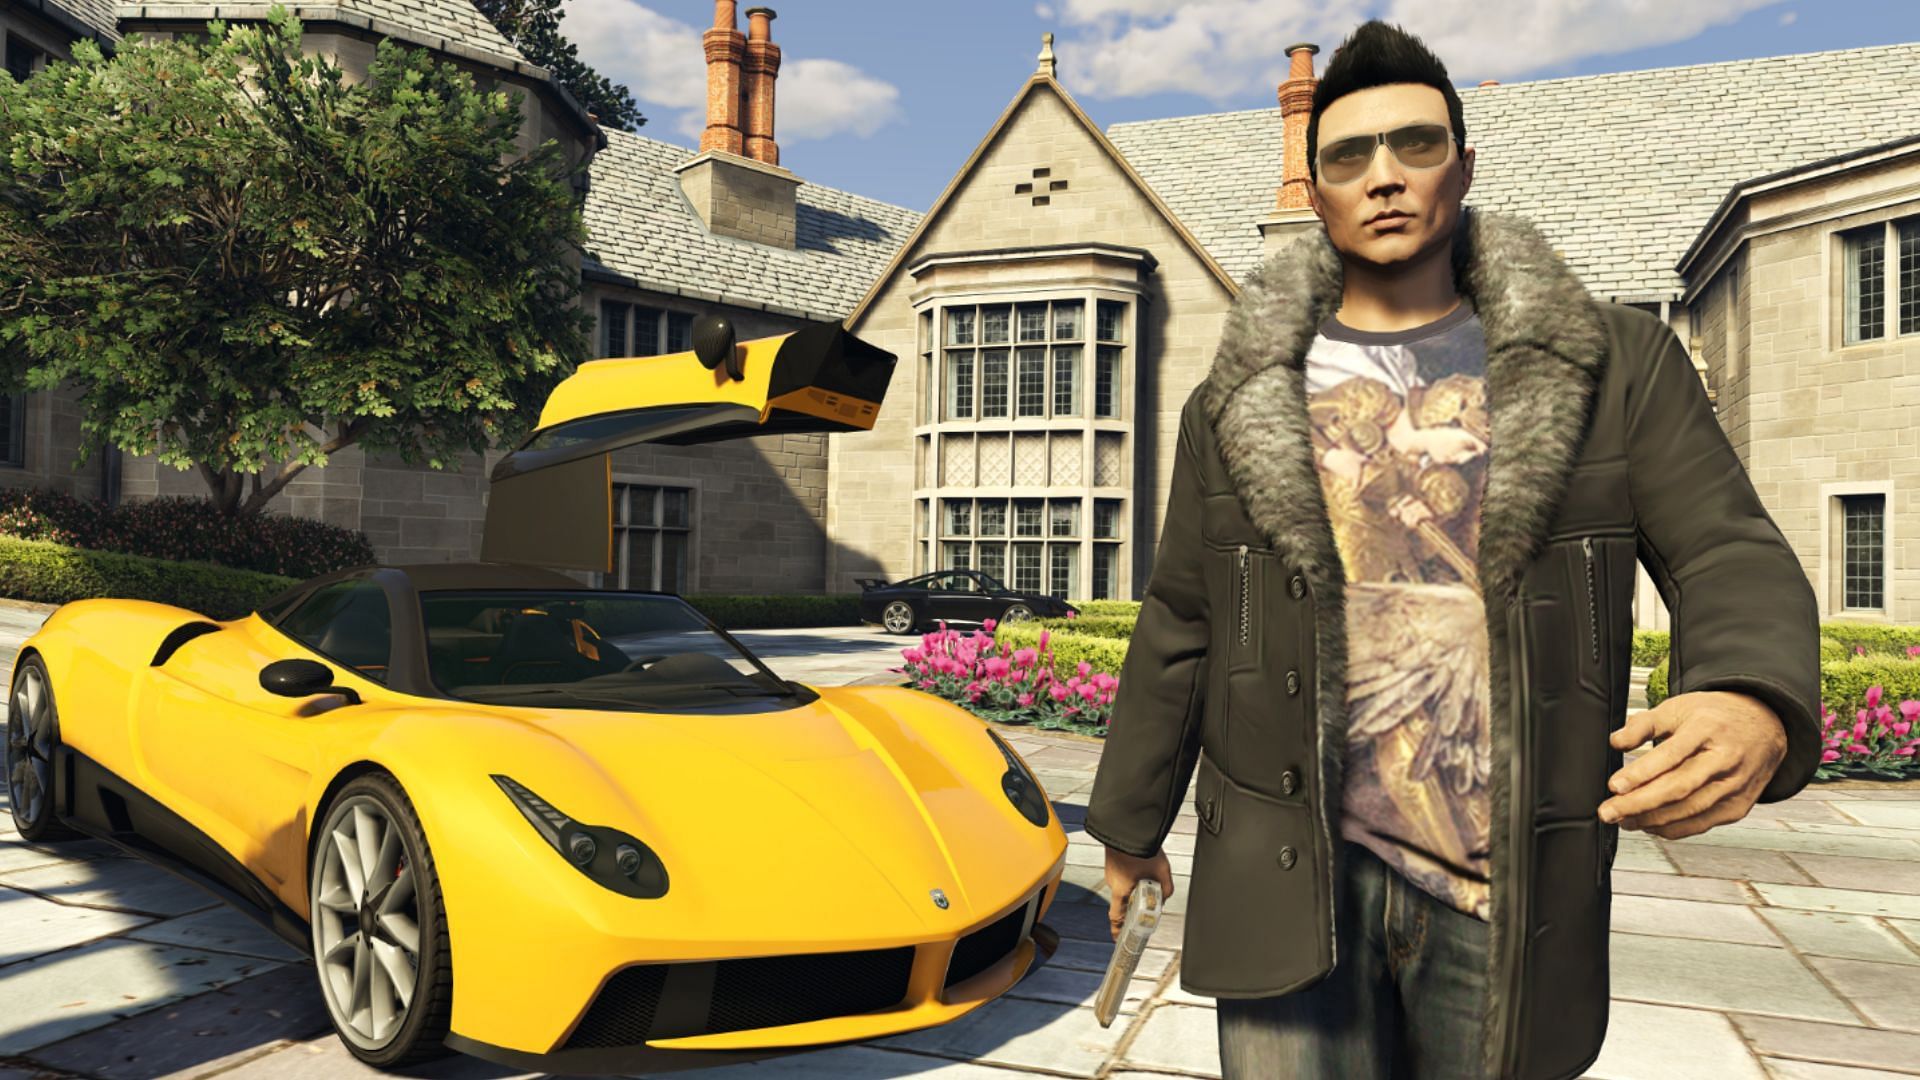 A GTA Online character flexing his expensive car and clothes (Image via Rockstar Games)